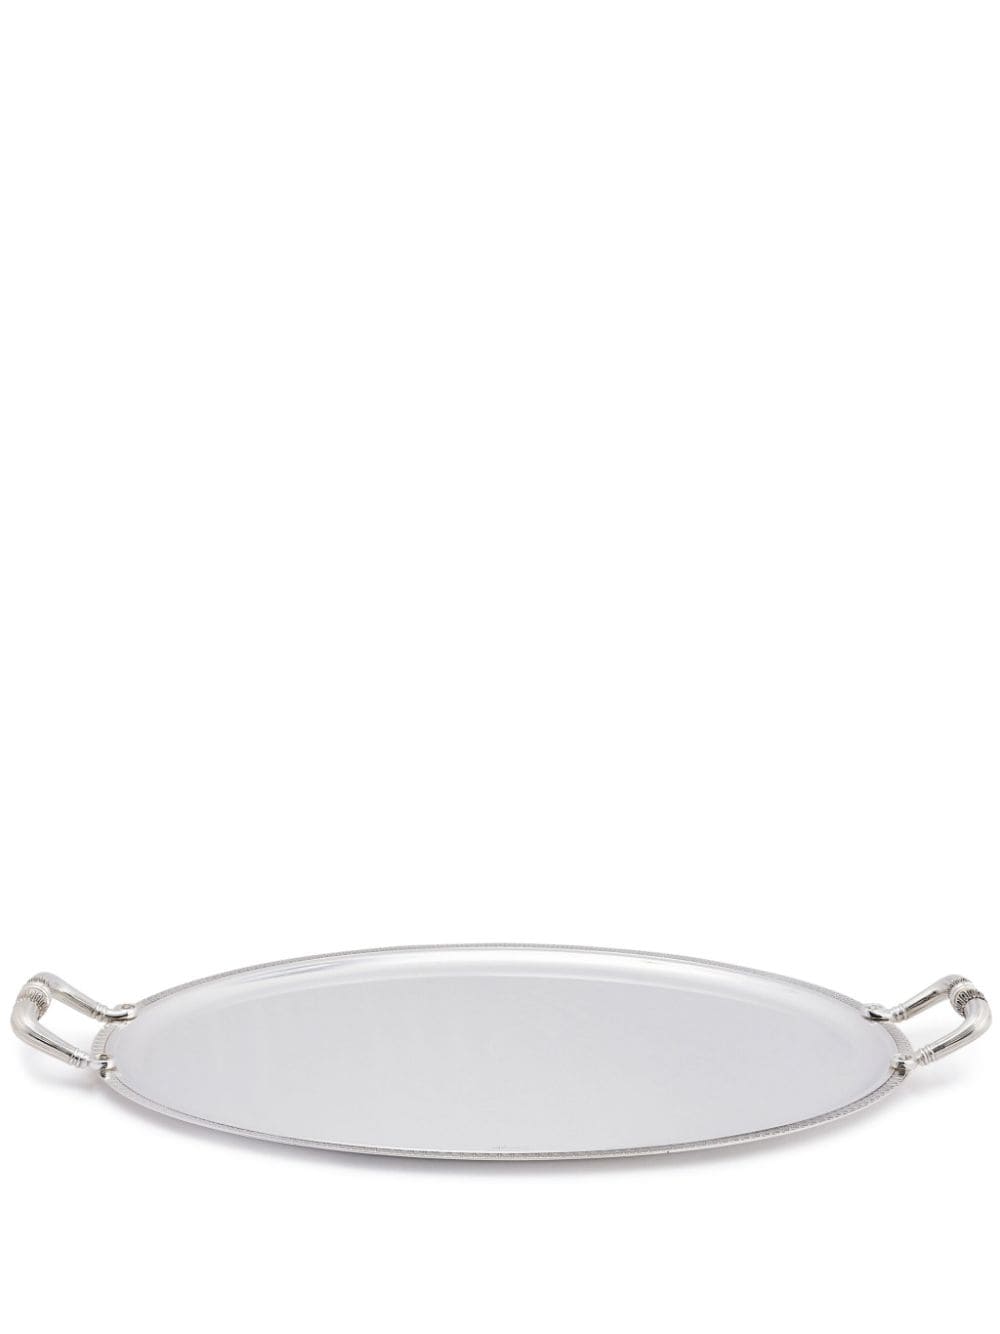 Christofle Malmaison oval-shape tray - Silver von Christofle